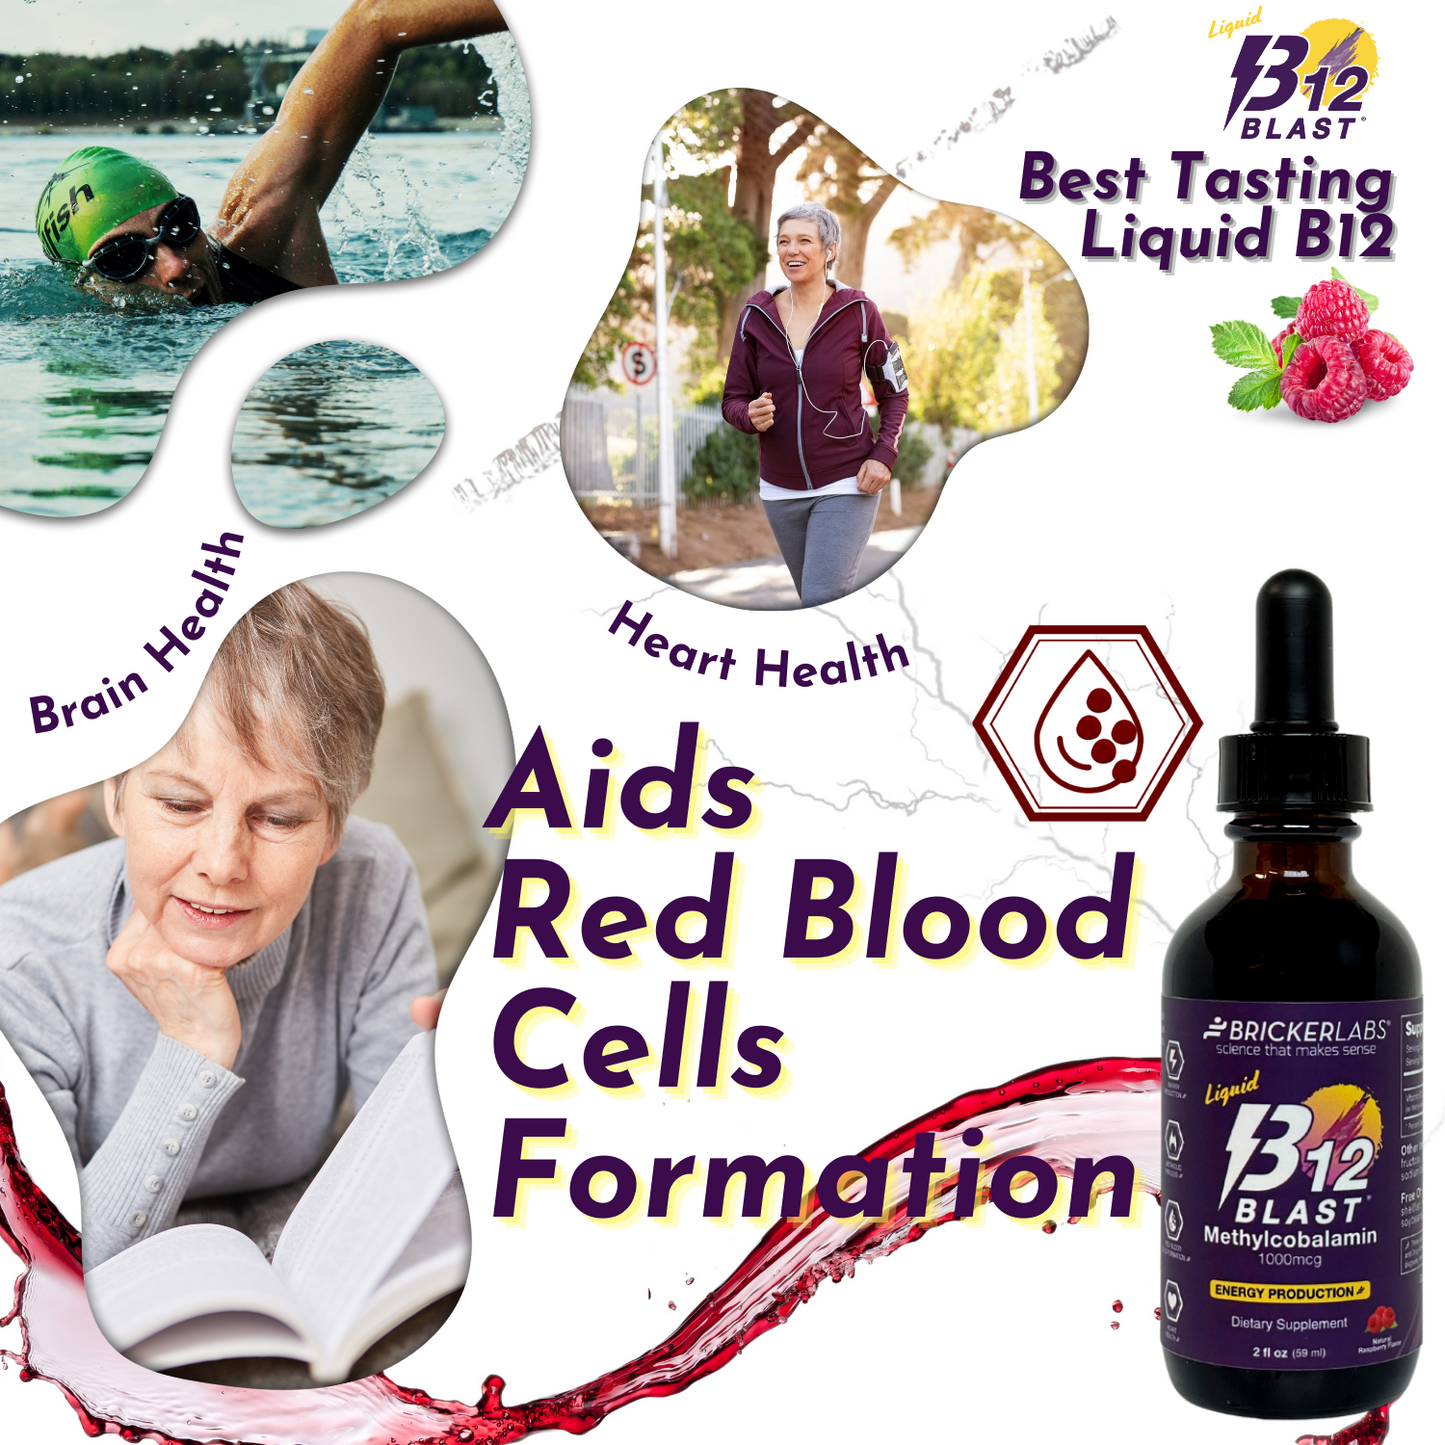 B-12 Blast® Liquid Methylcobalamin 1000mcg  liquid vitamin B12